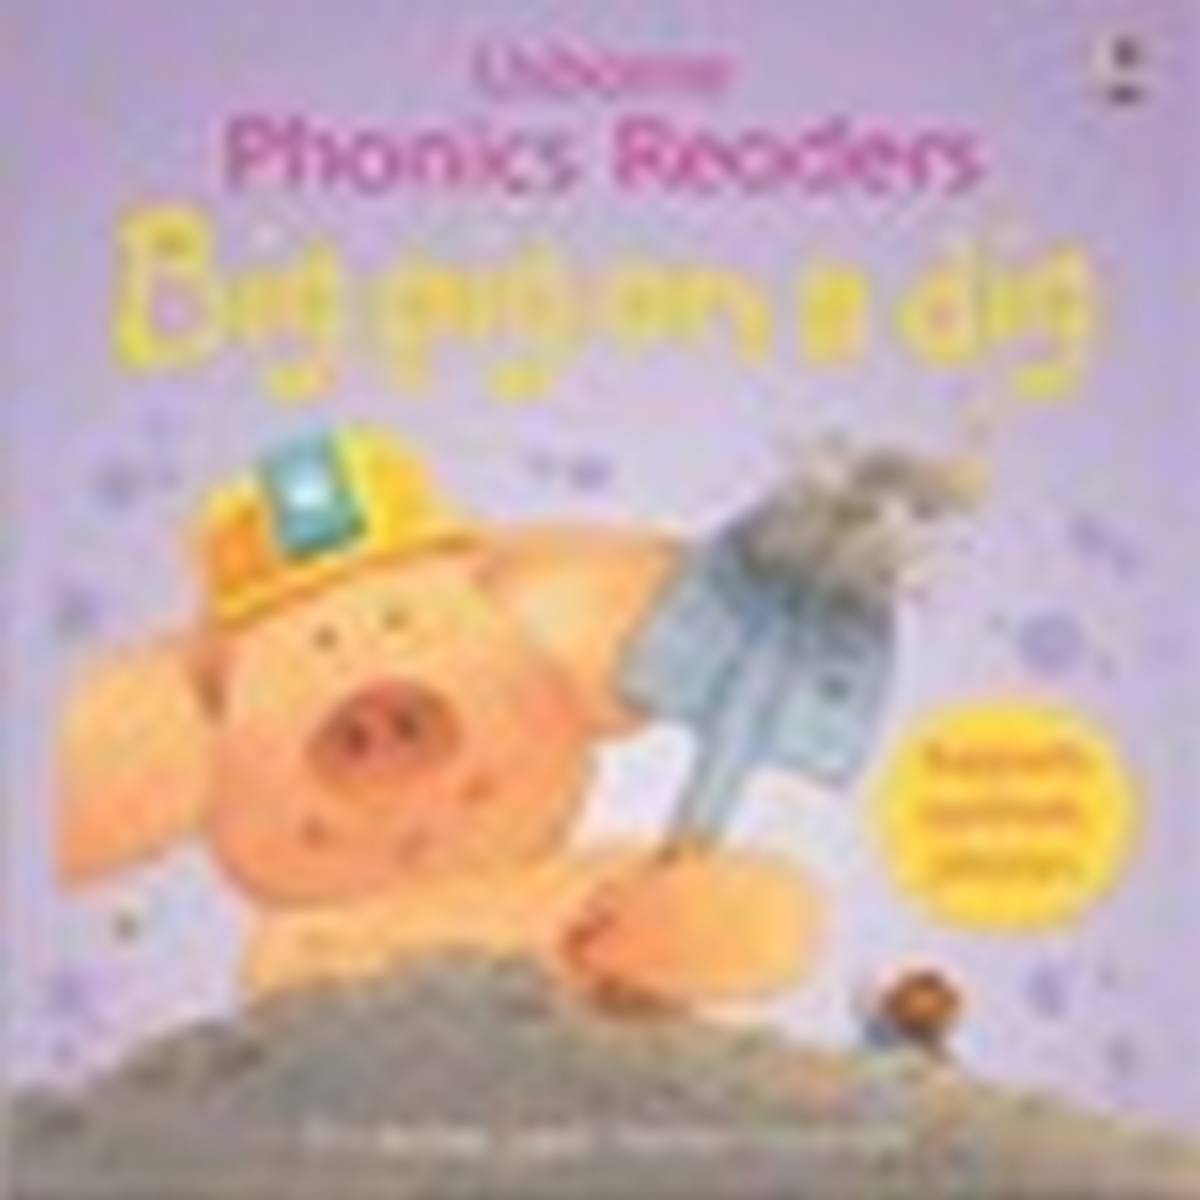 Big Pig on a Dig (Phonics Readers)